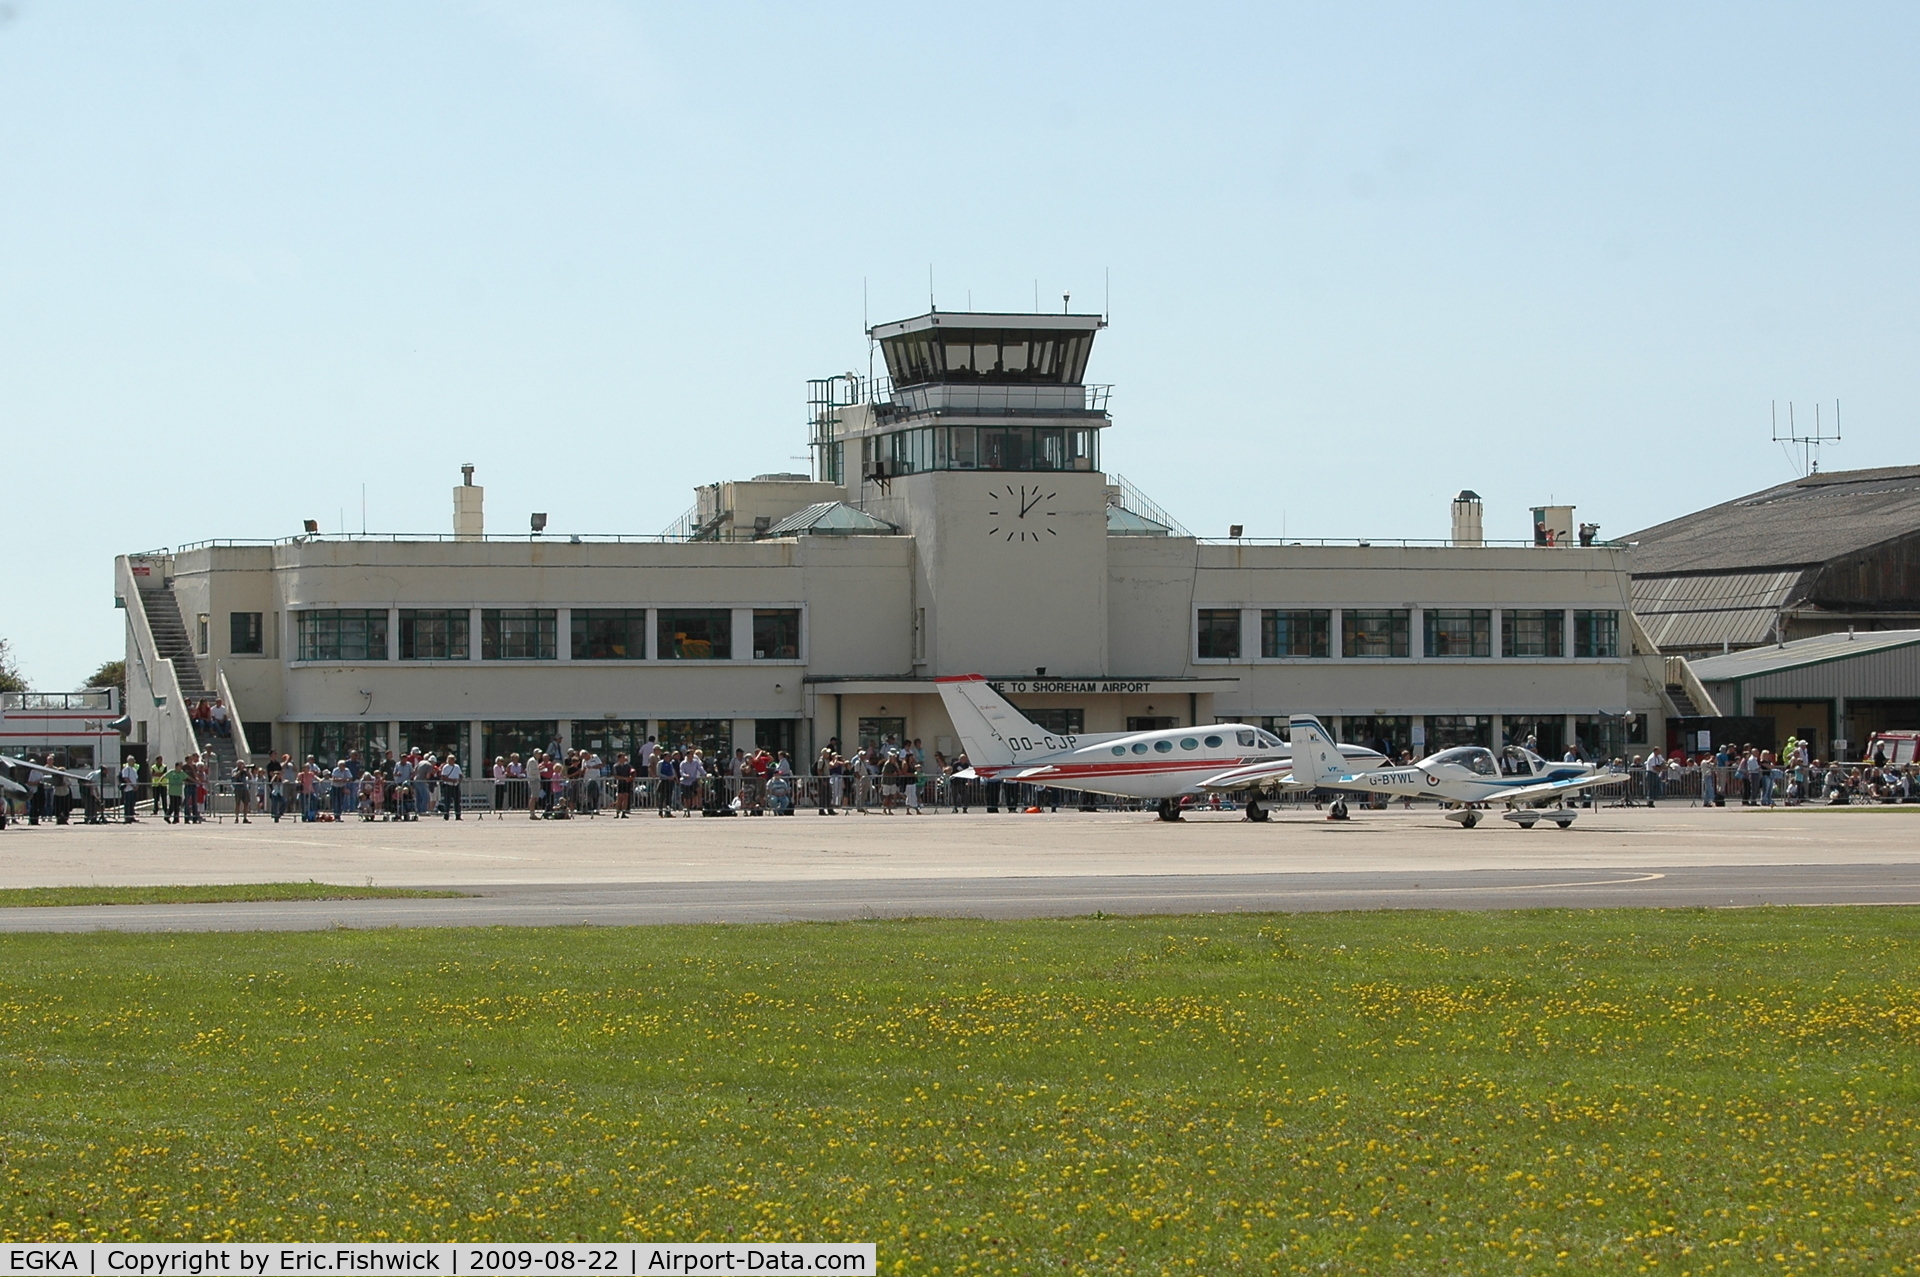 Shoreham Airport, Shoreham United Kingdom (EGKA) - The Terminal Building